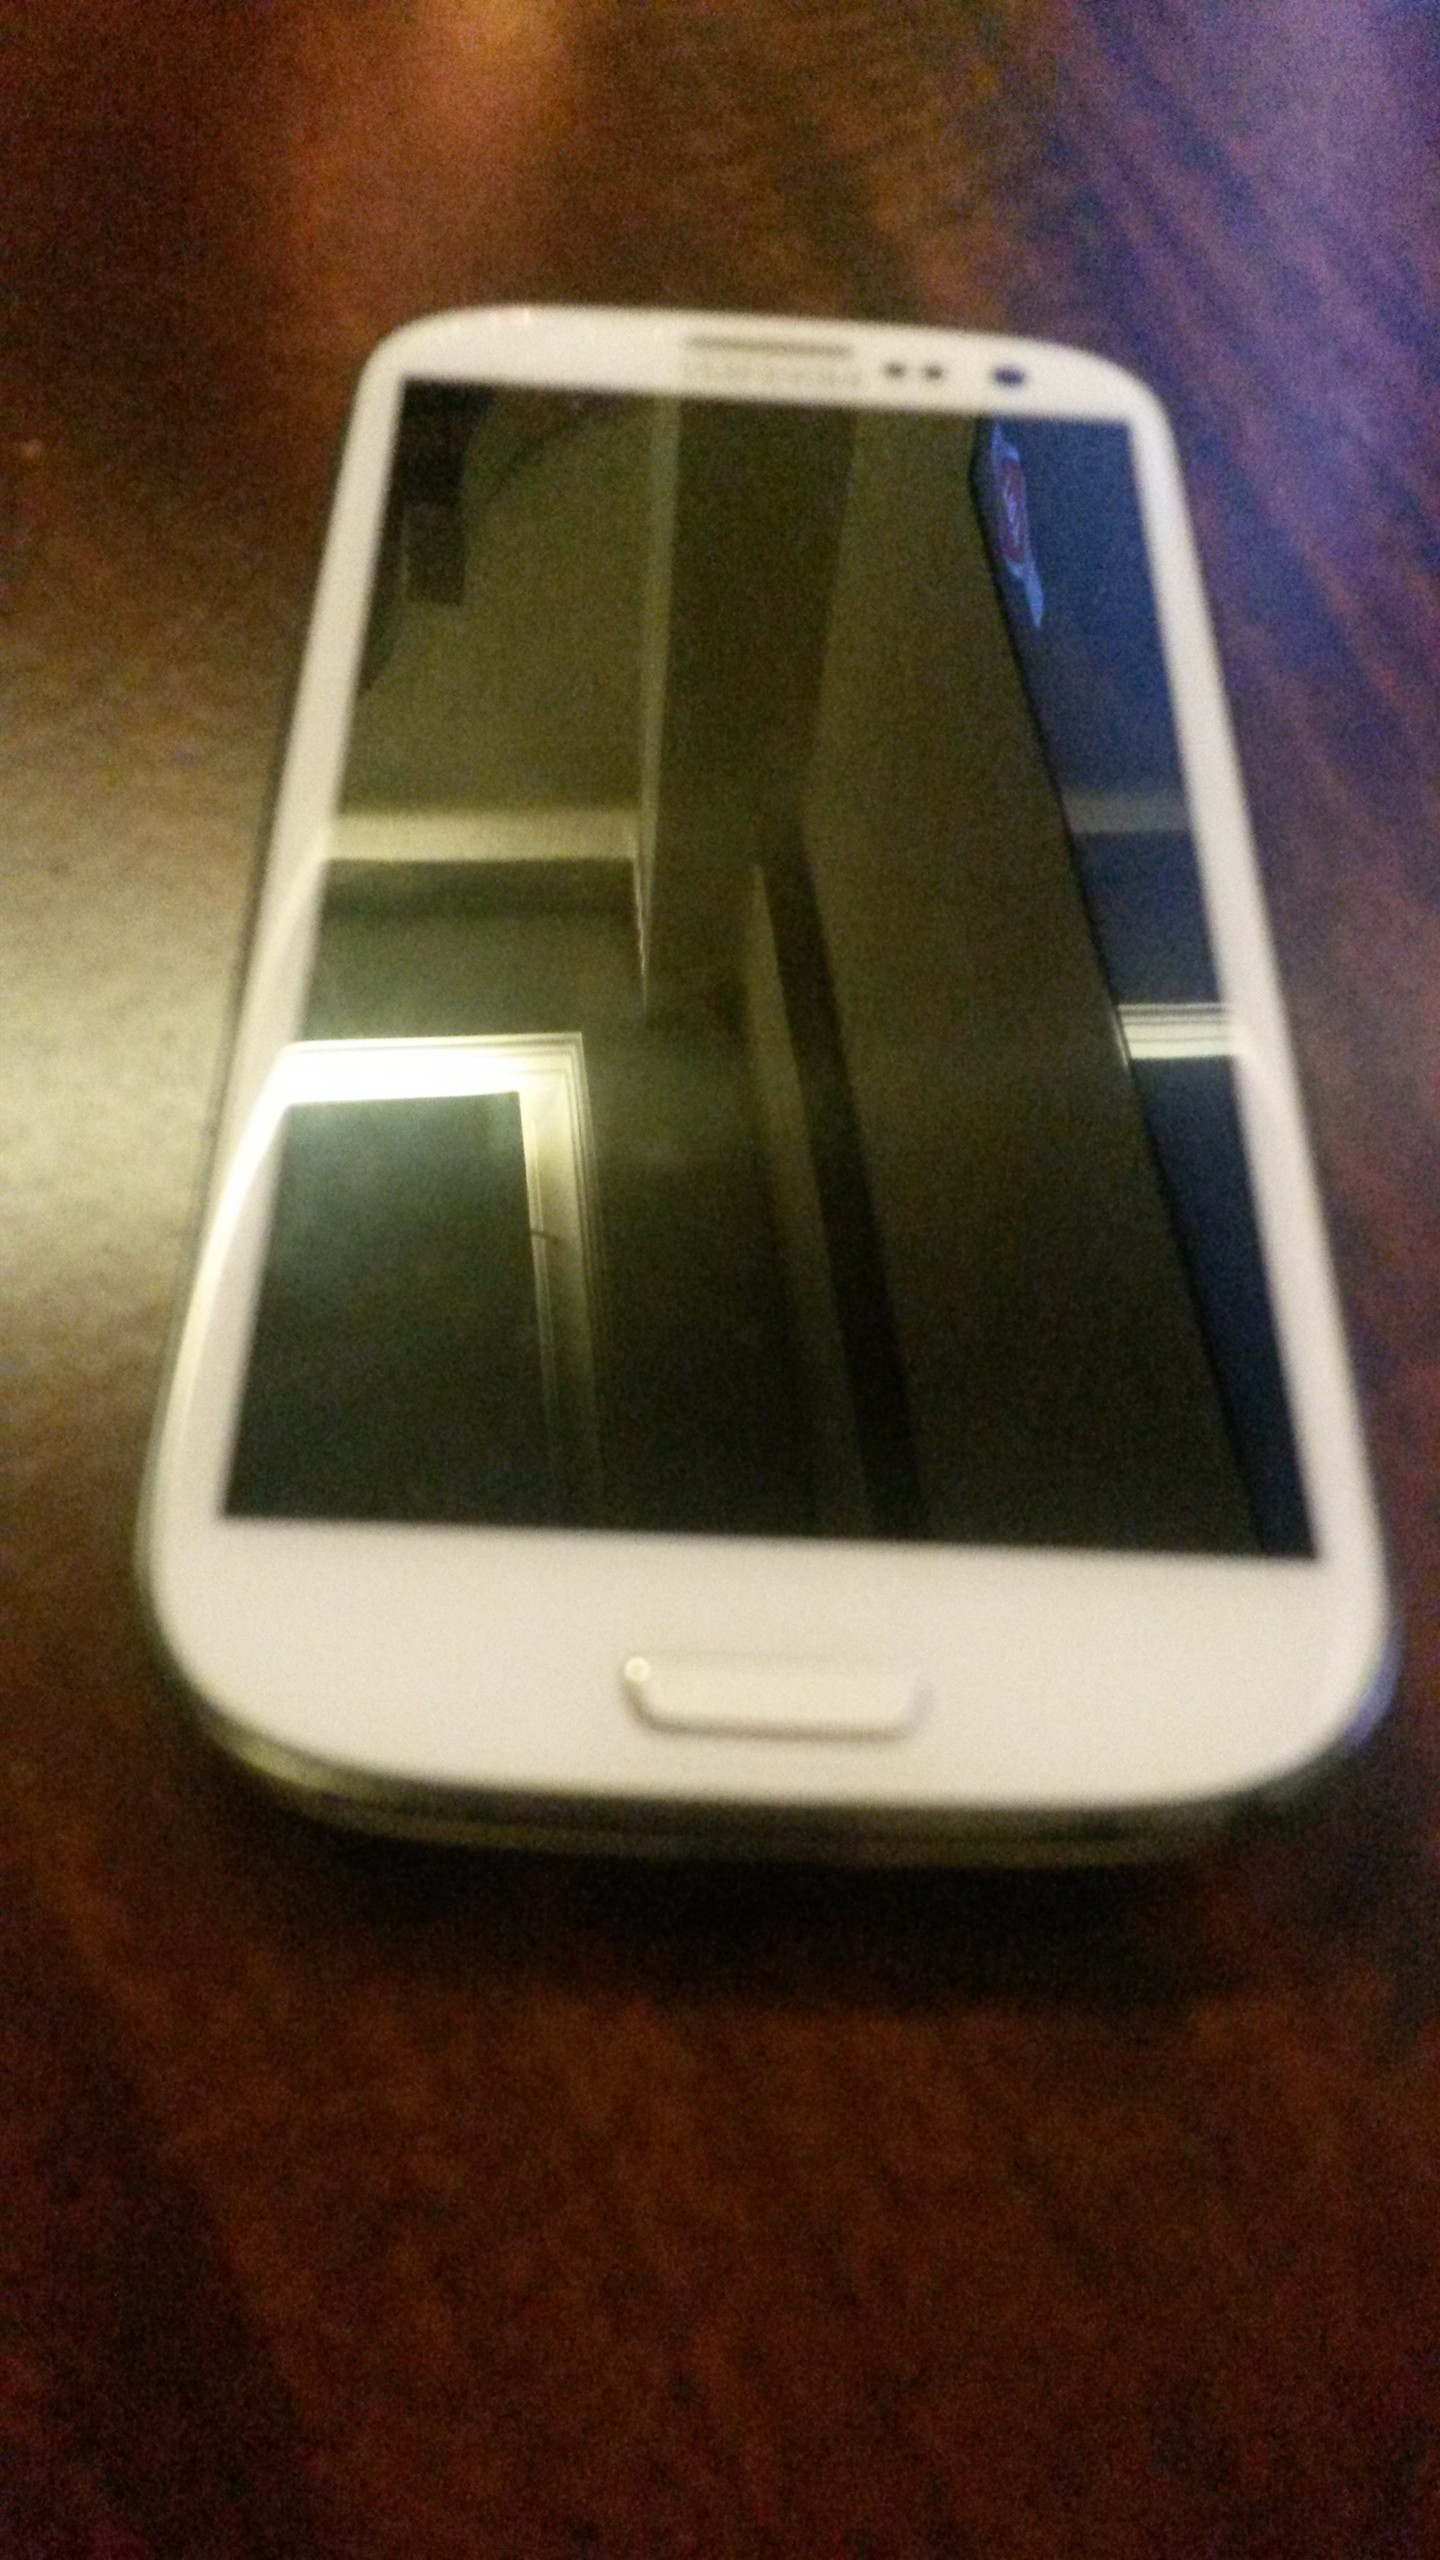  Satılmıştır silinebilir Galaxy S3